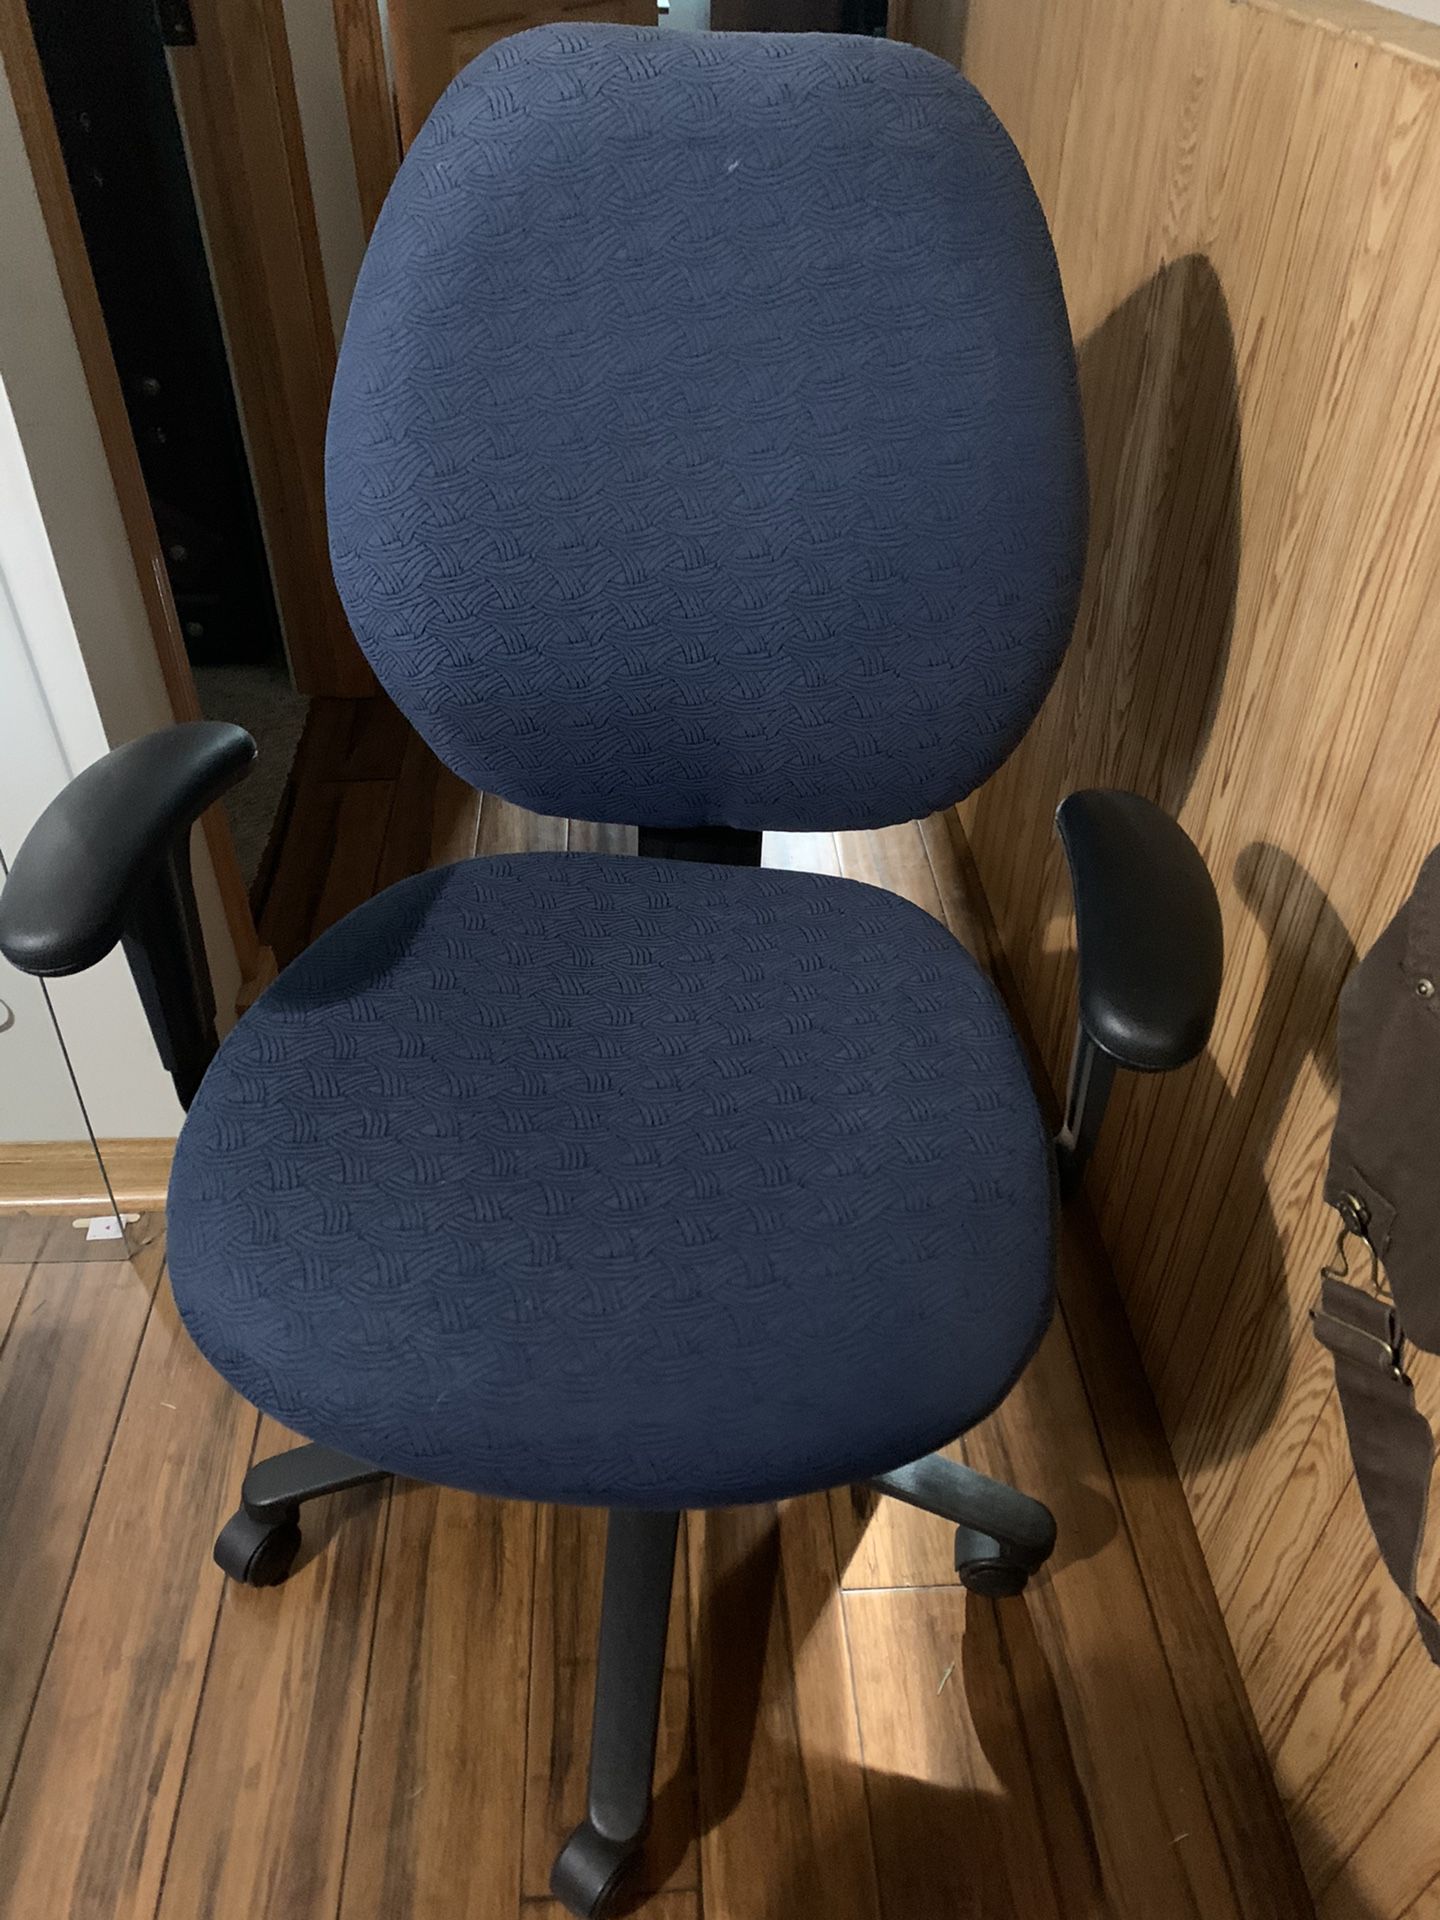 Nice office Chair - $45